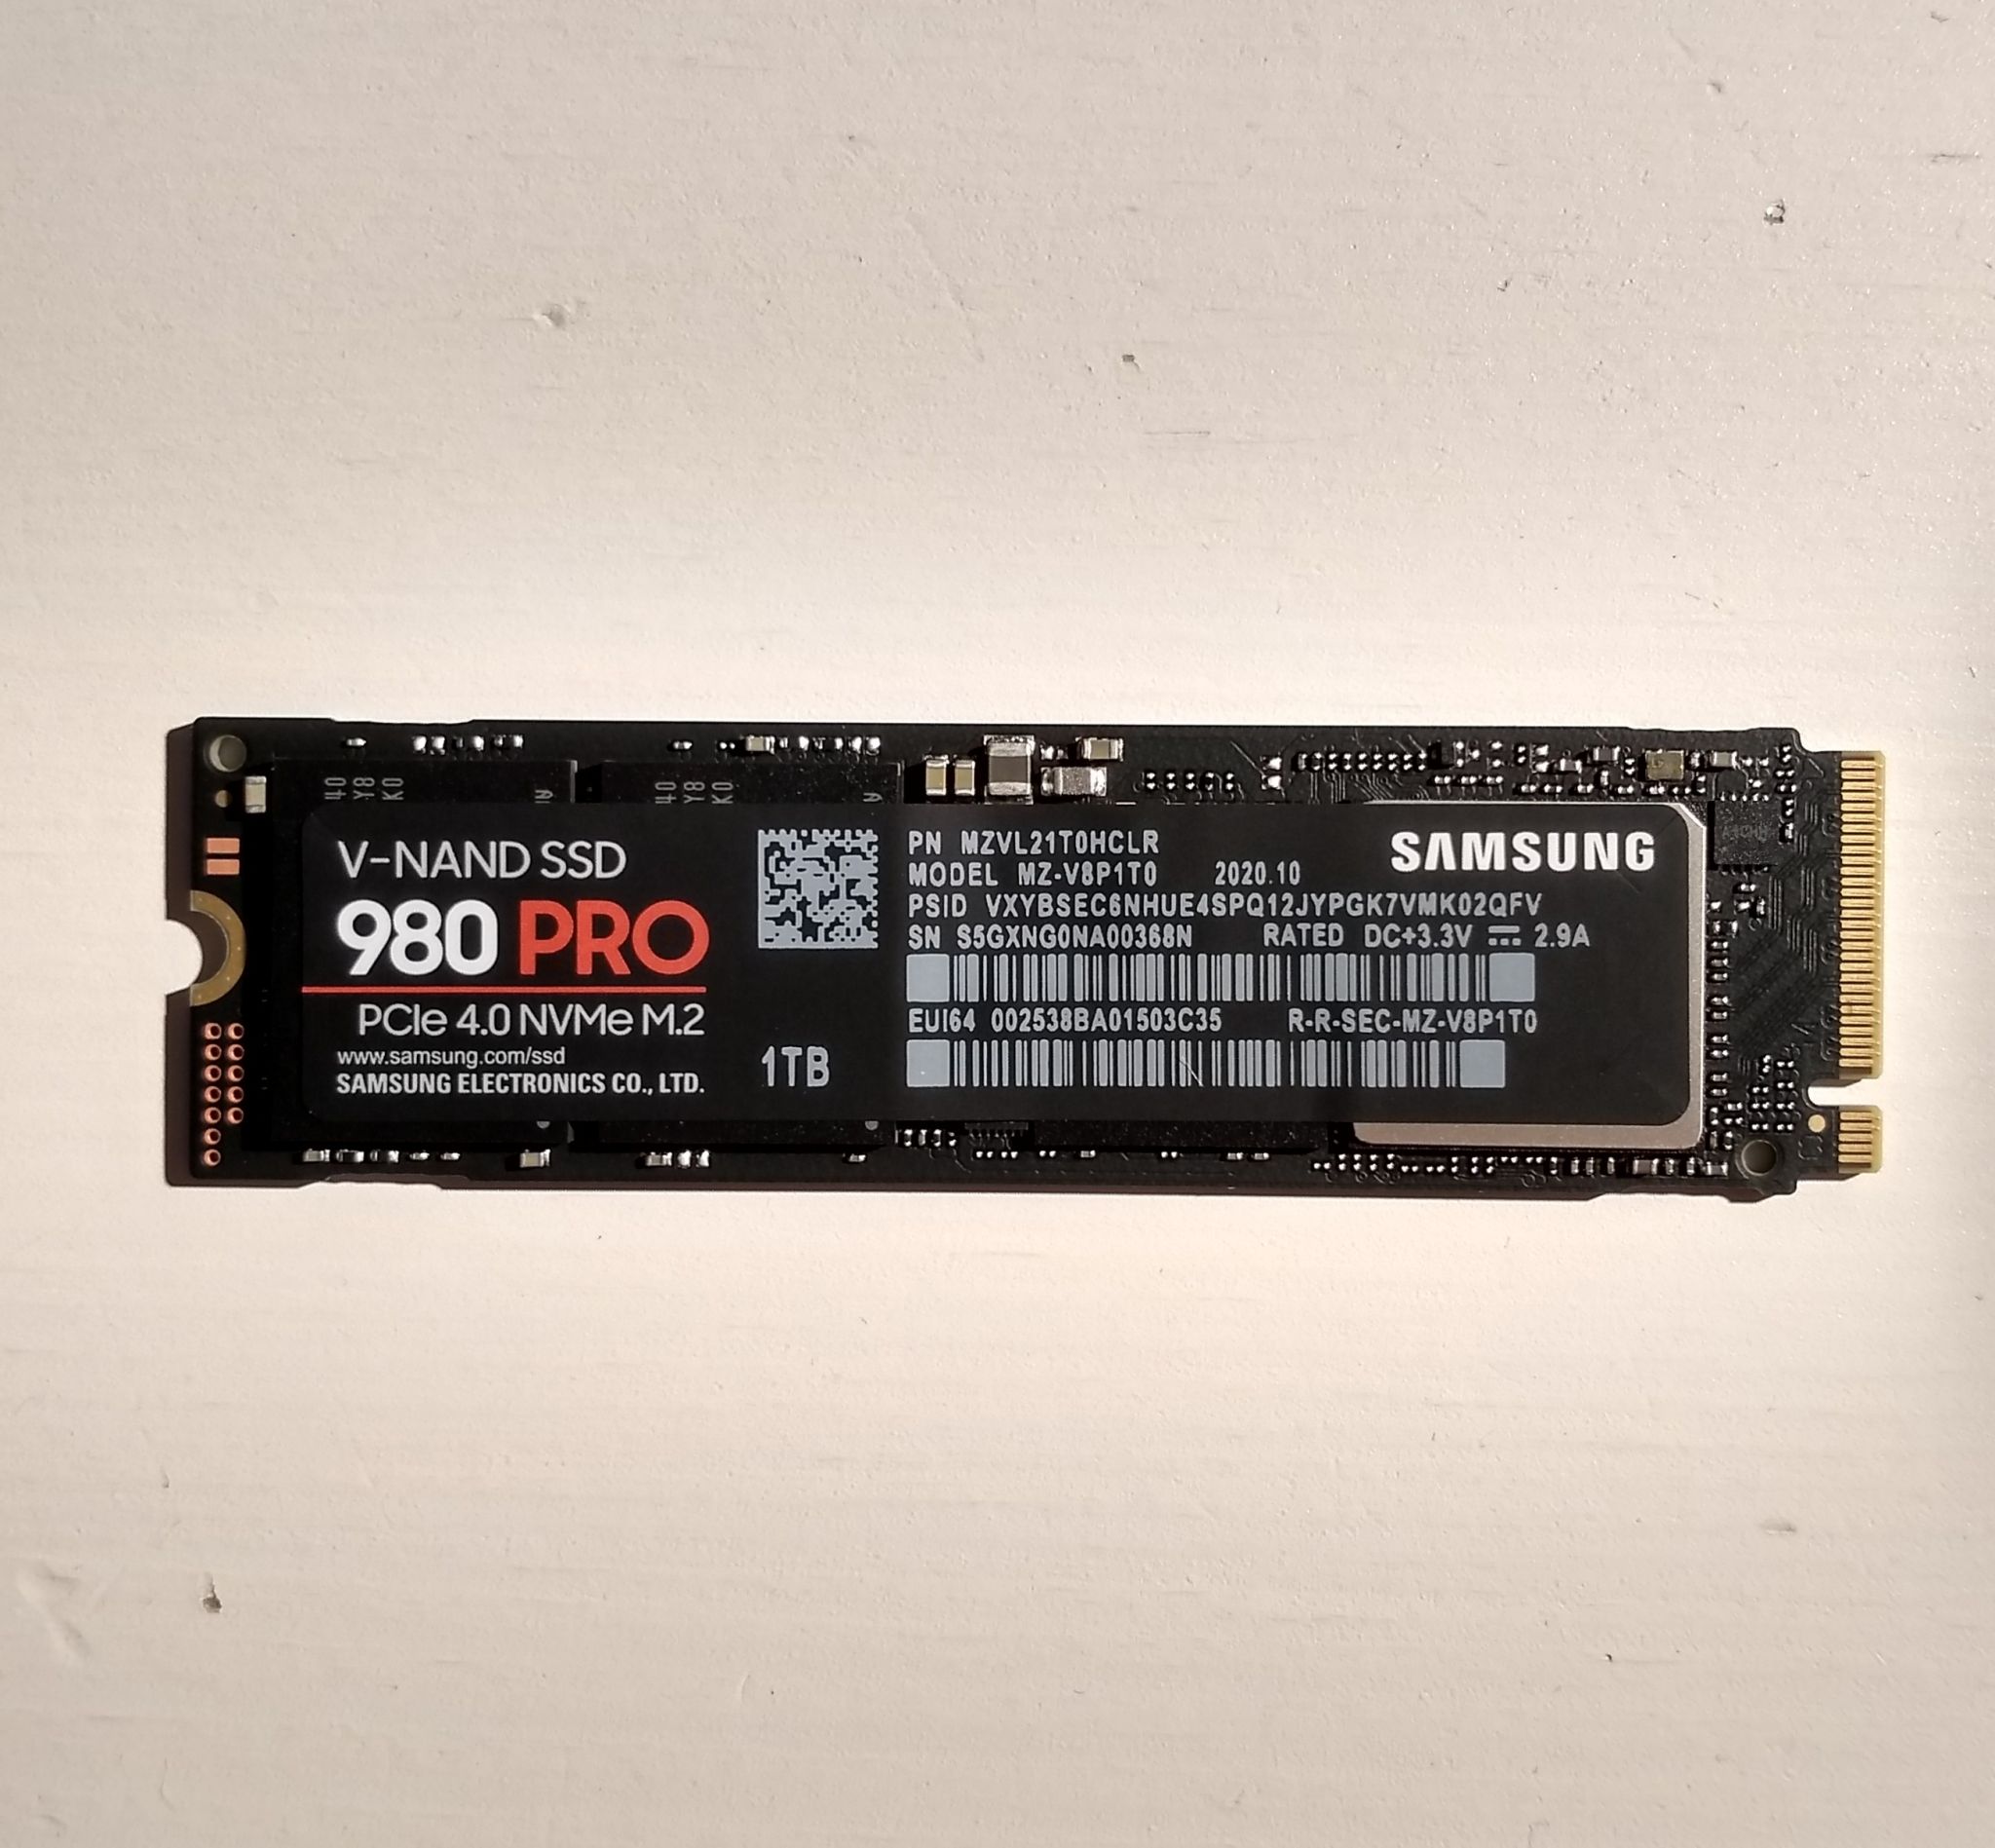 Mz v8v250bw. SSD Samsung 980 Pro. SSD m2 Samsung 980. SSD: Samsung 980 Pro m.2 NVME PCI-E 4.0 1000gb. SSD m2 Samsung 980 Pro.